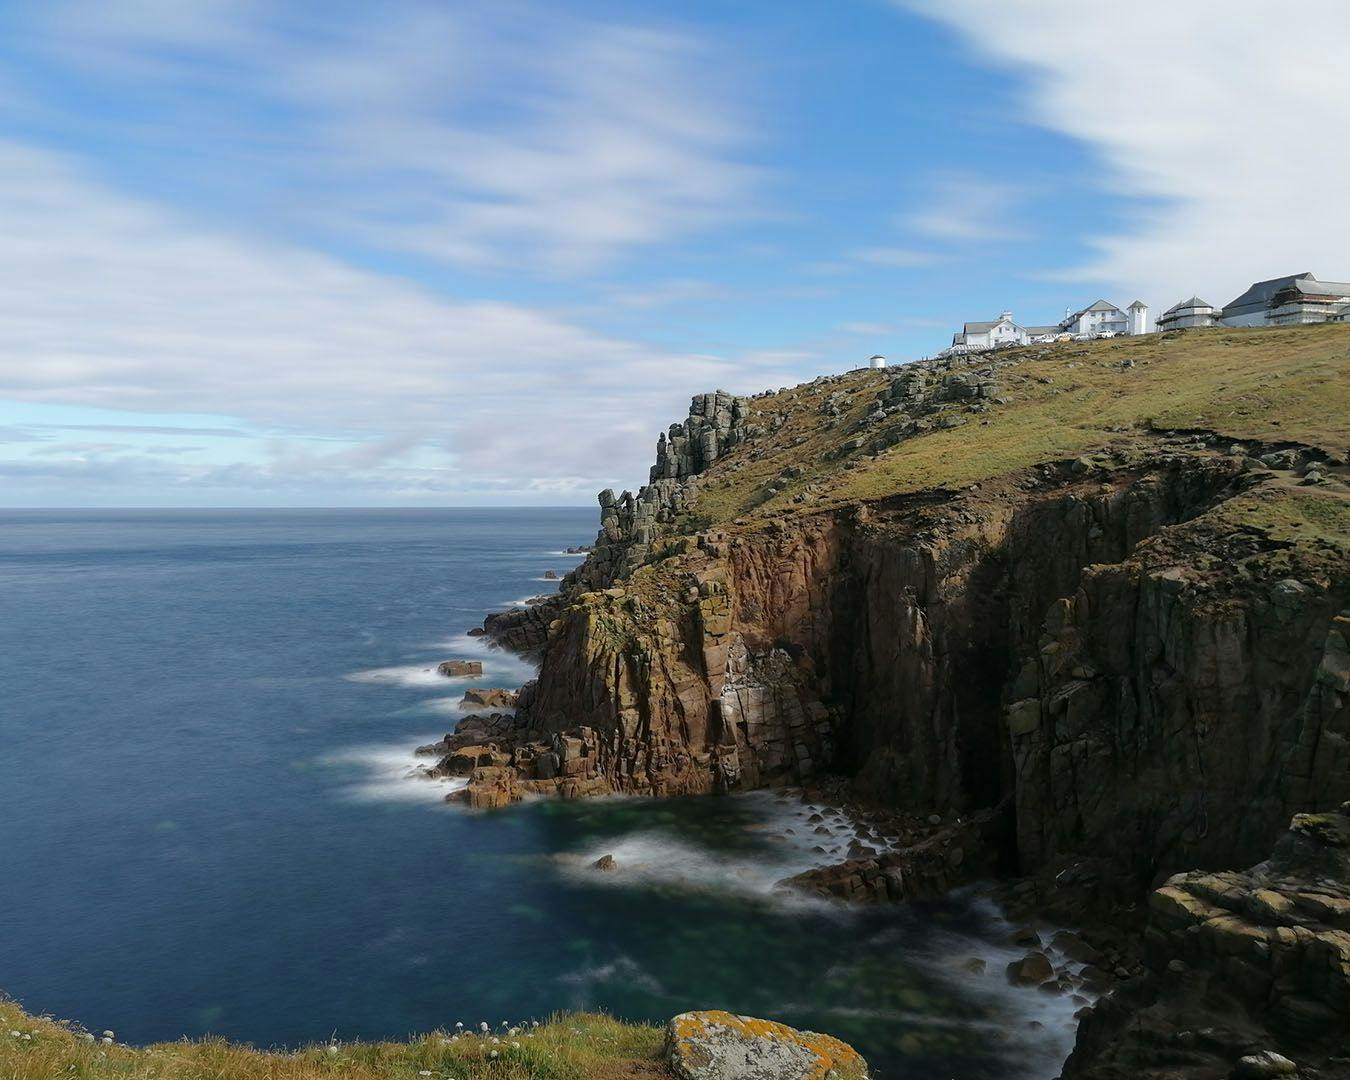 Land's End: Where Cornwall's Beauty Meets the Atlantic